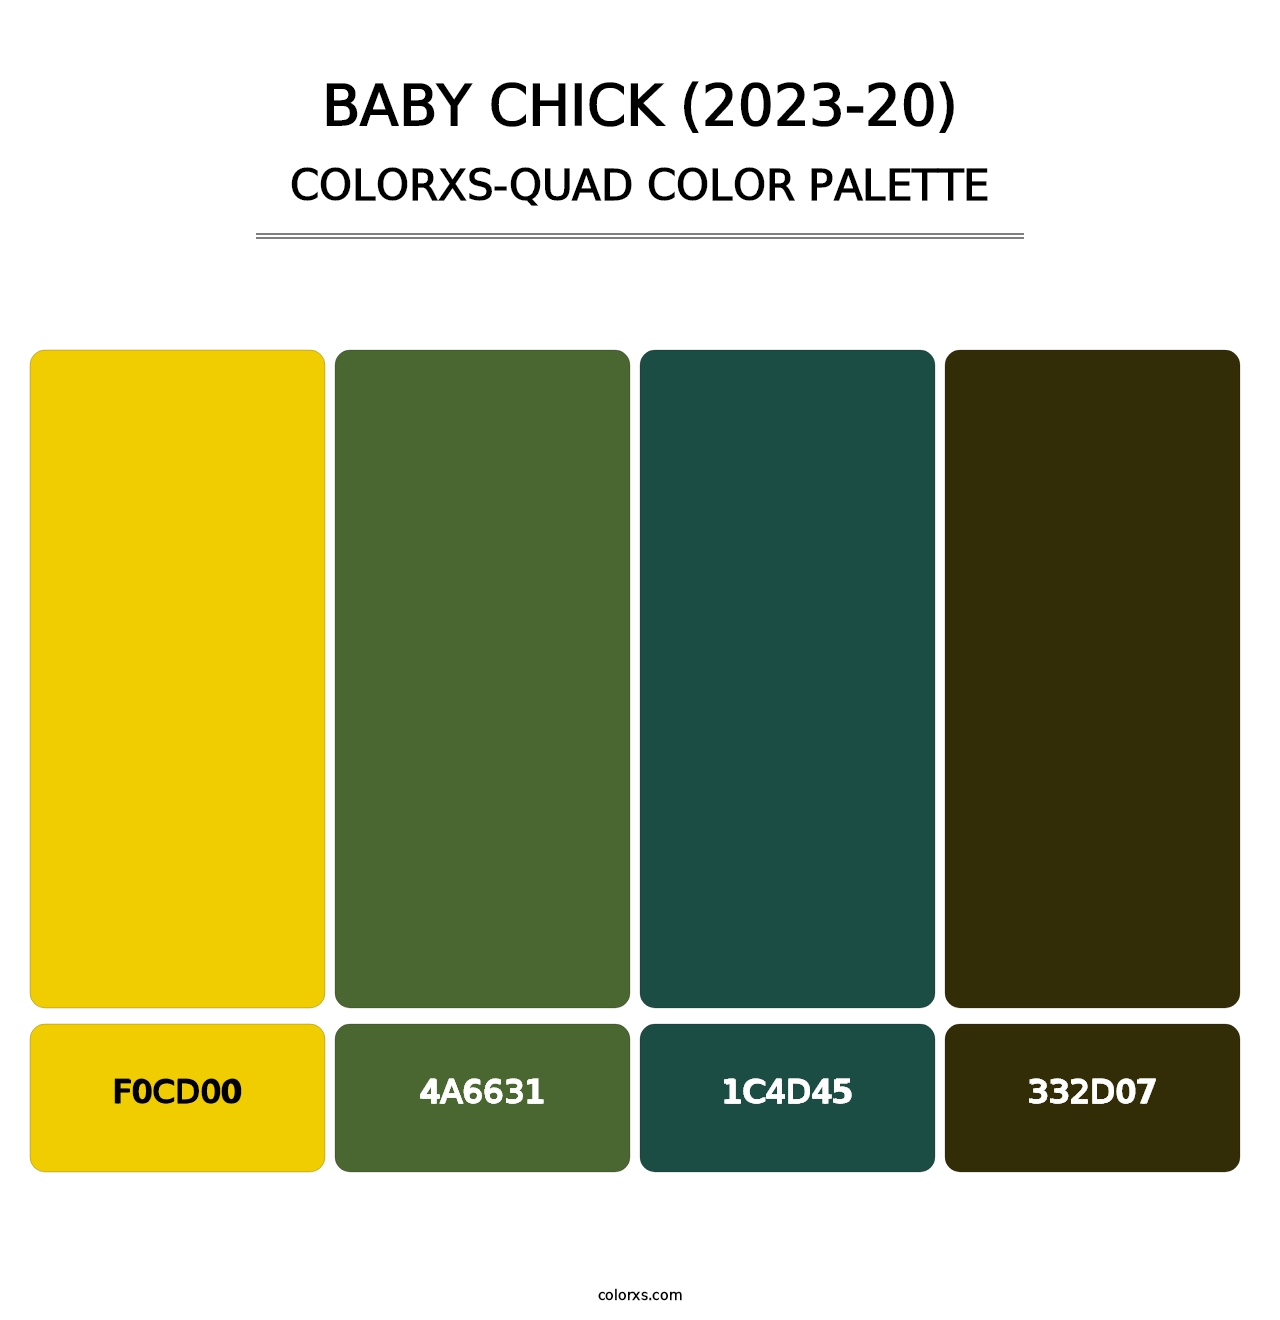 Baby Chick (2023-20) - Colorxs Quad Palette